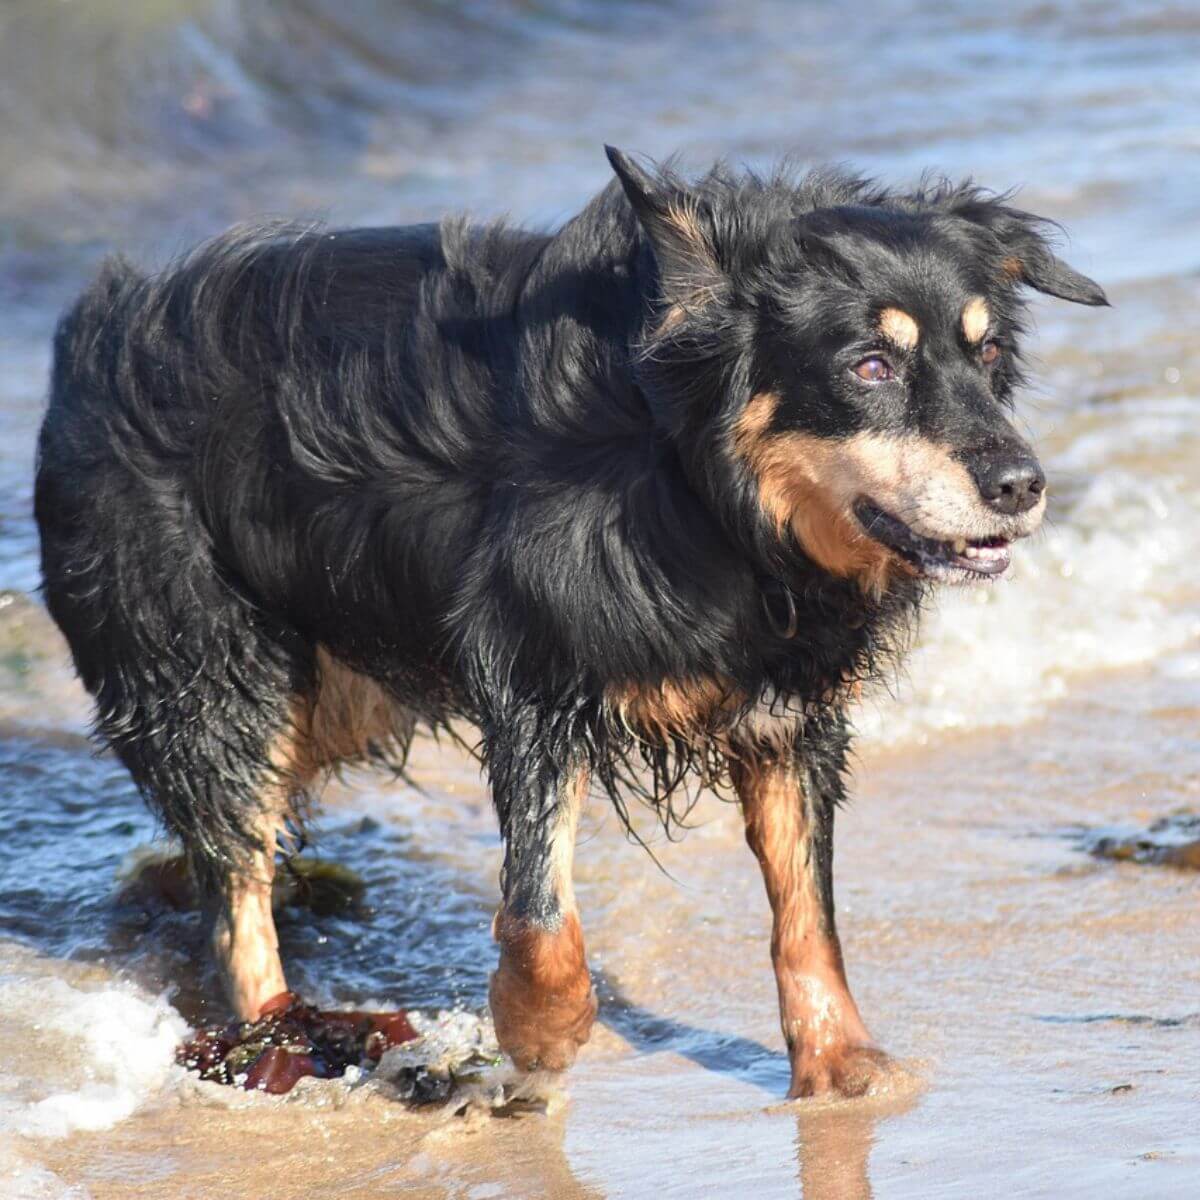 wet dog with Marine algae at beach